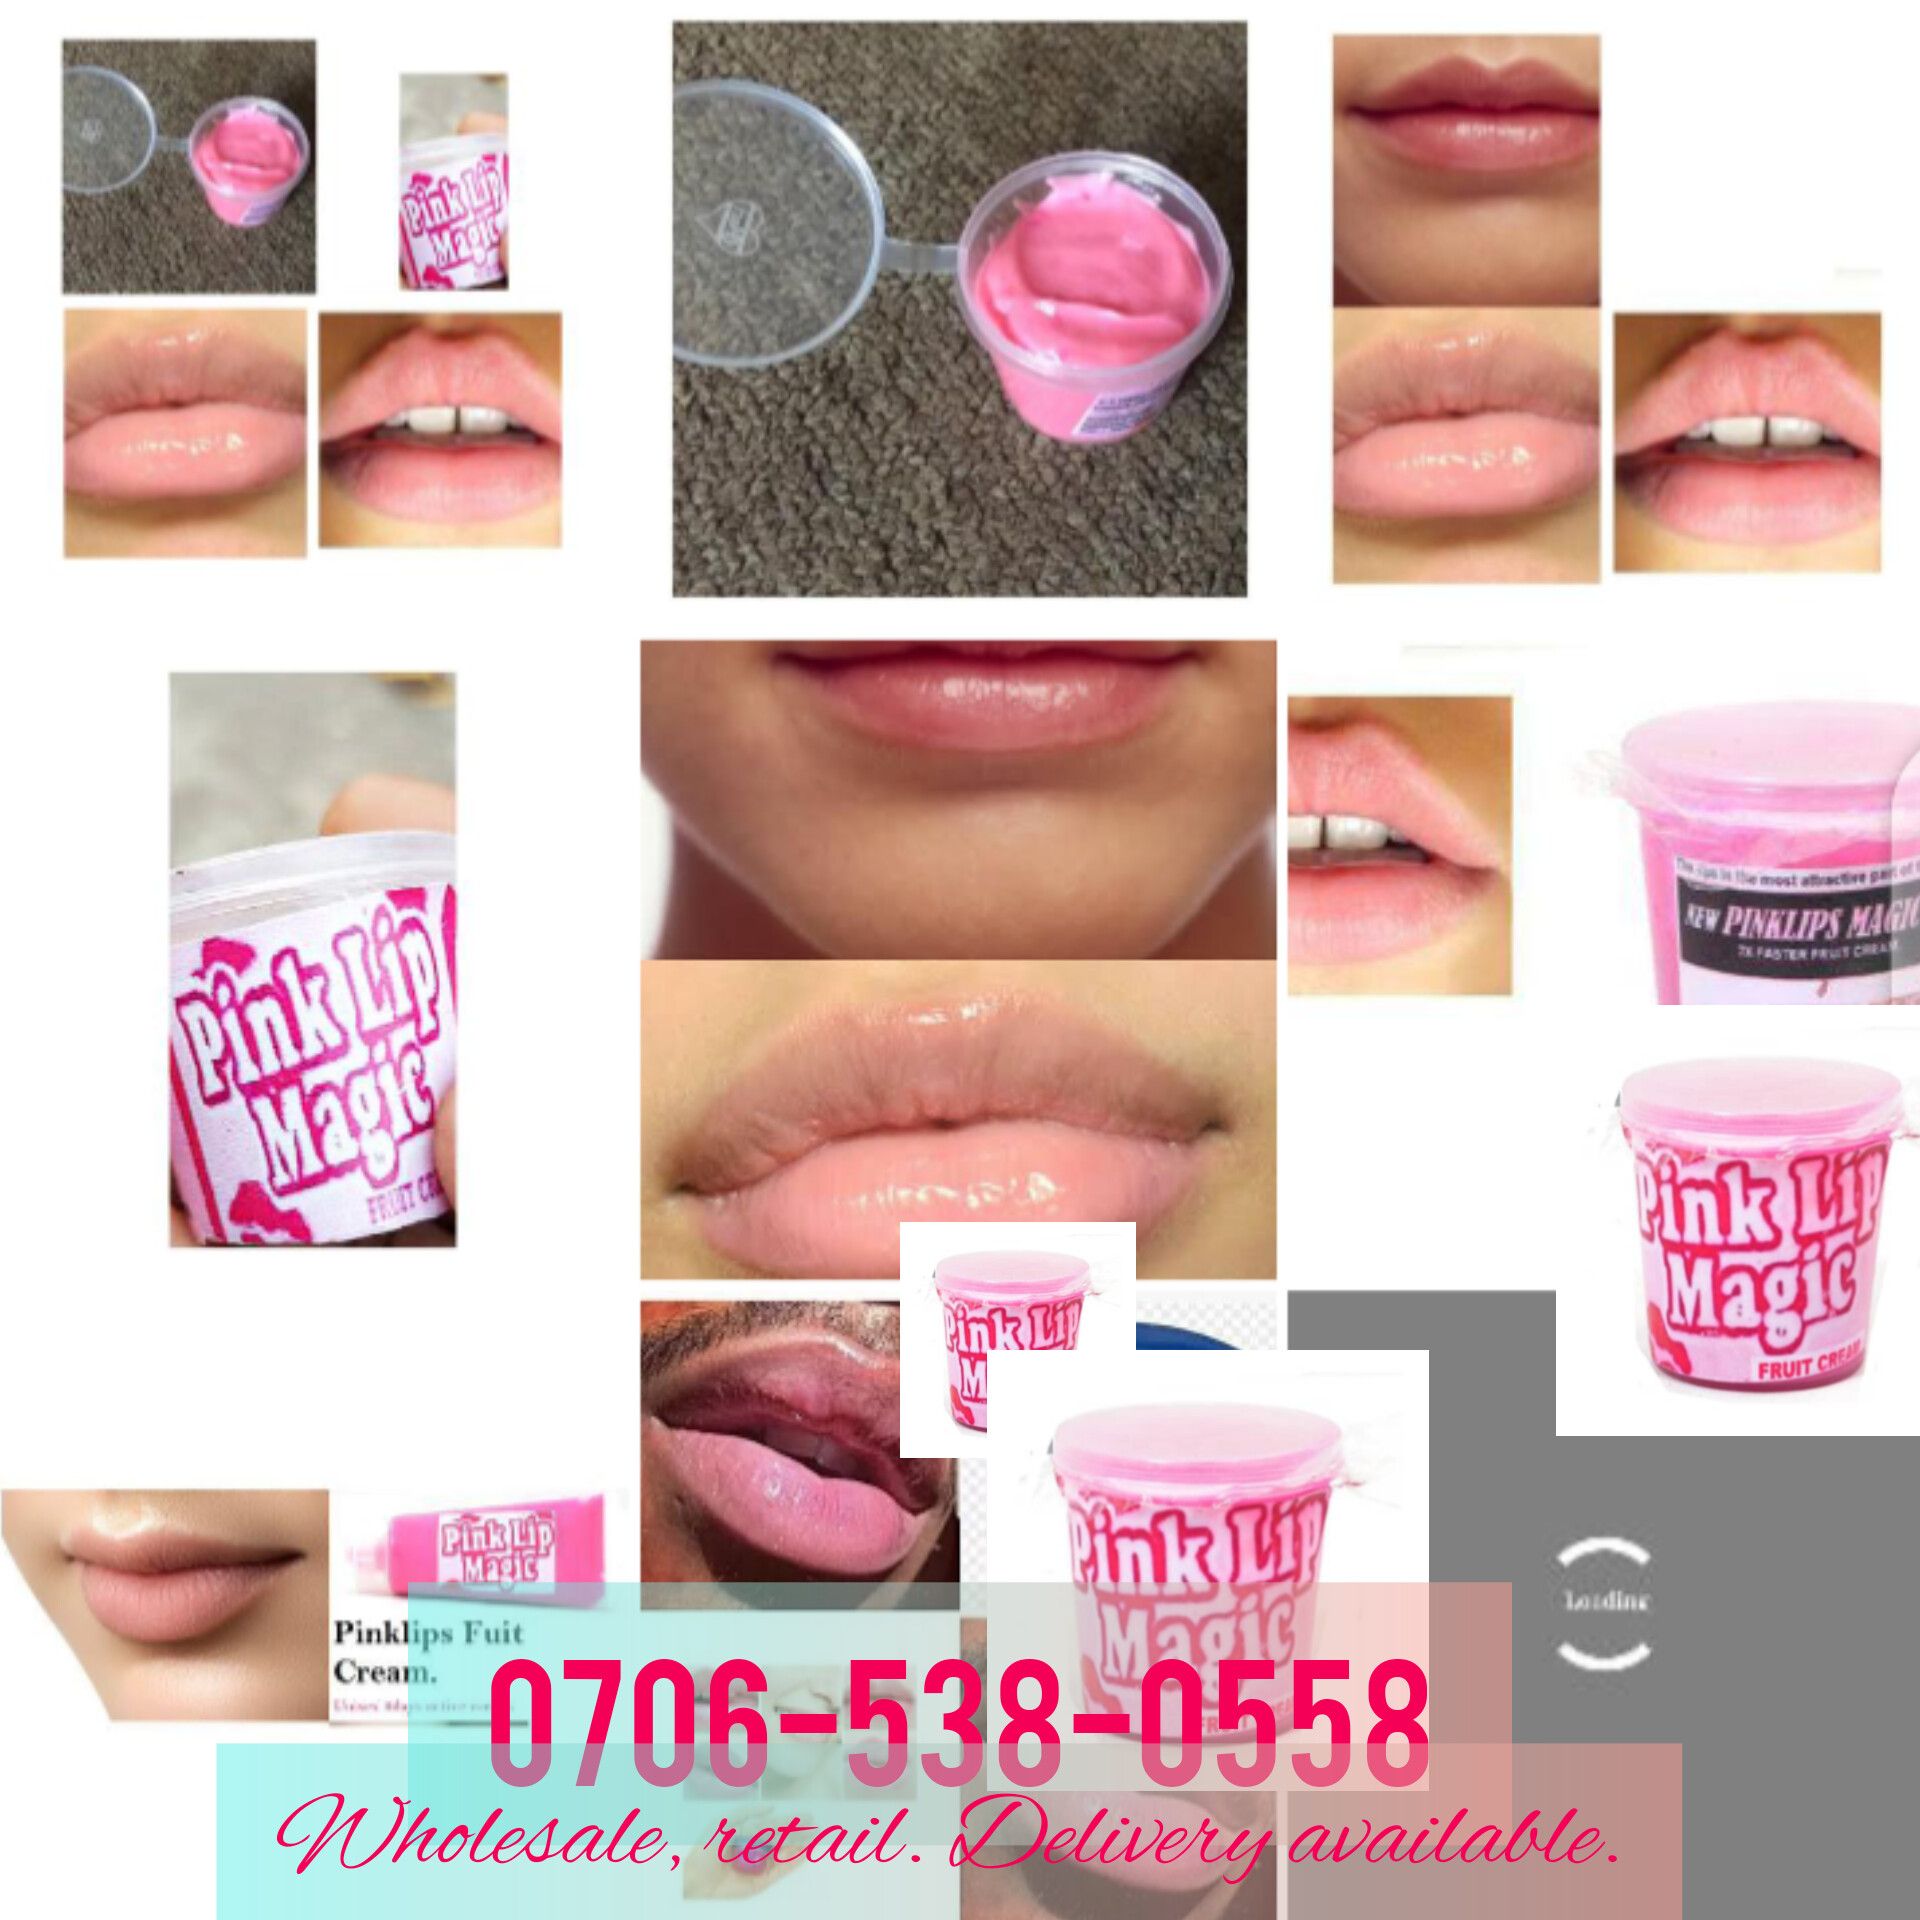 Pink lips magic cream, Health and Wellness